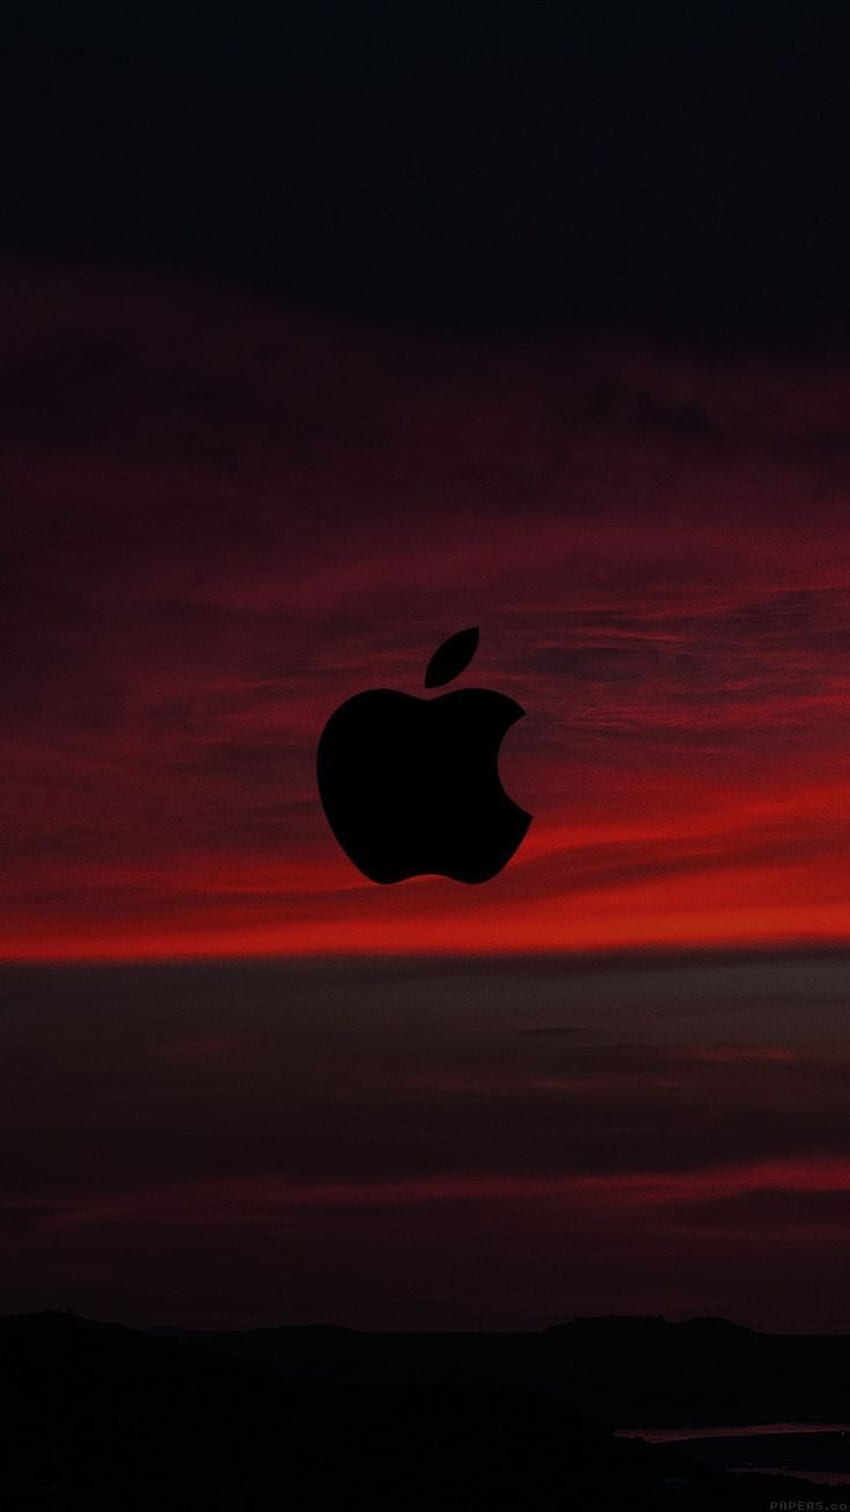 Red and Black iPhone - Top Red and Black iPhone Background - Wallpap in 2021. Black iphone, Apple iphone, Apple logo iphone HD phone wallpaper